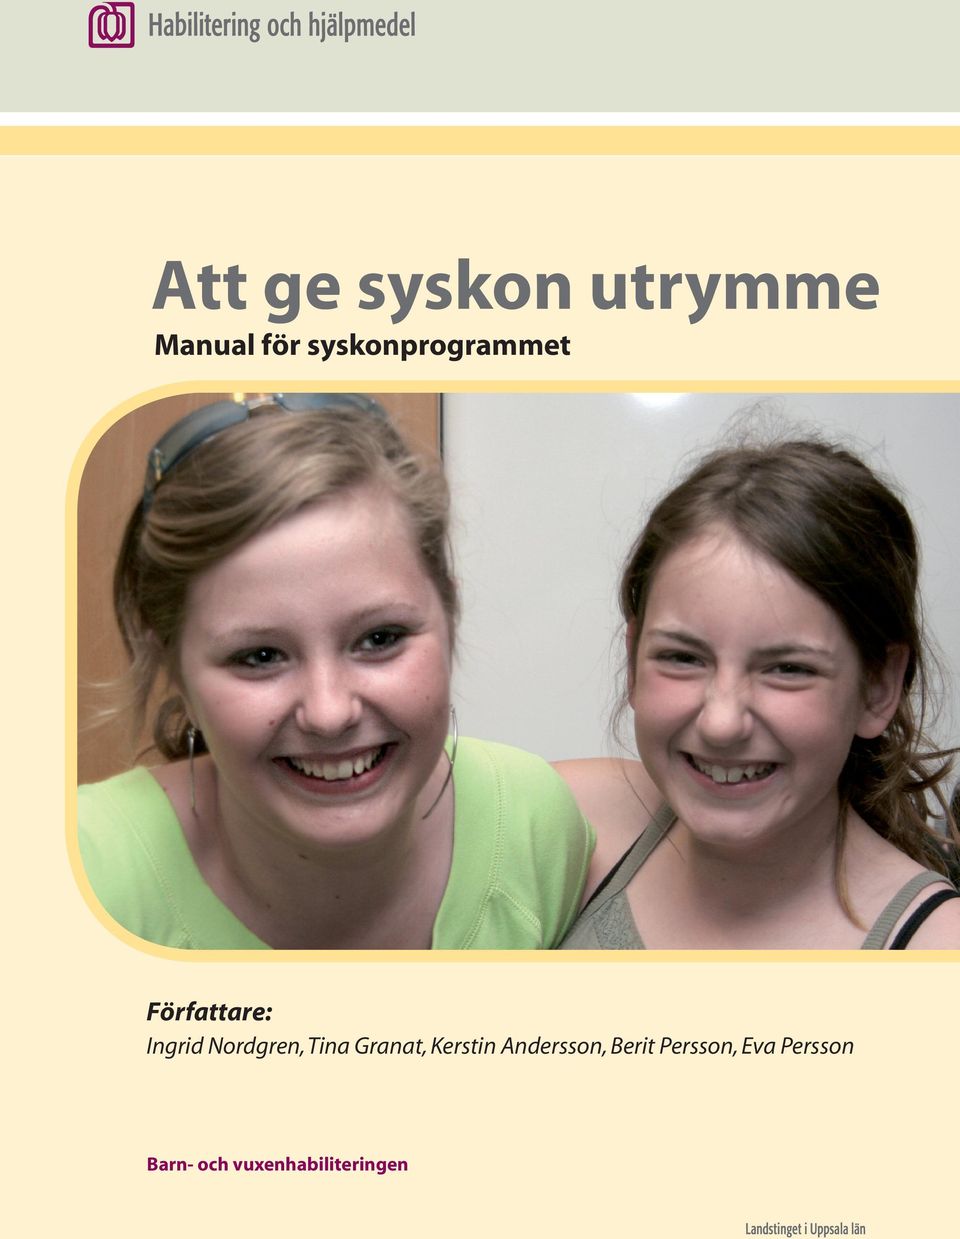 Kerstin Andersson, Berit Persson,